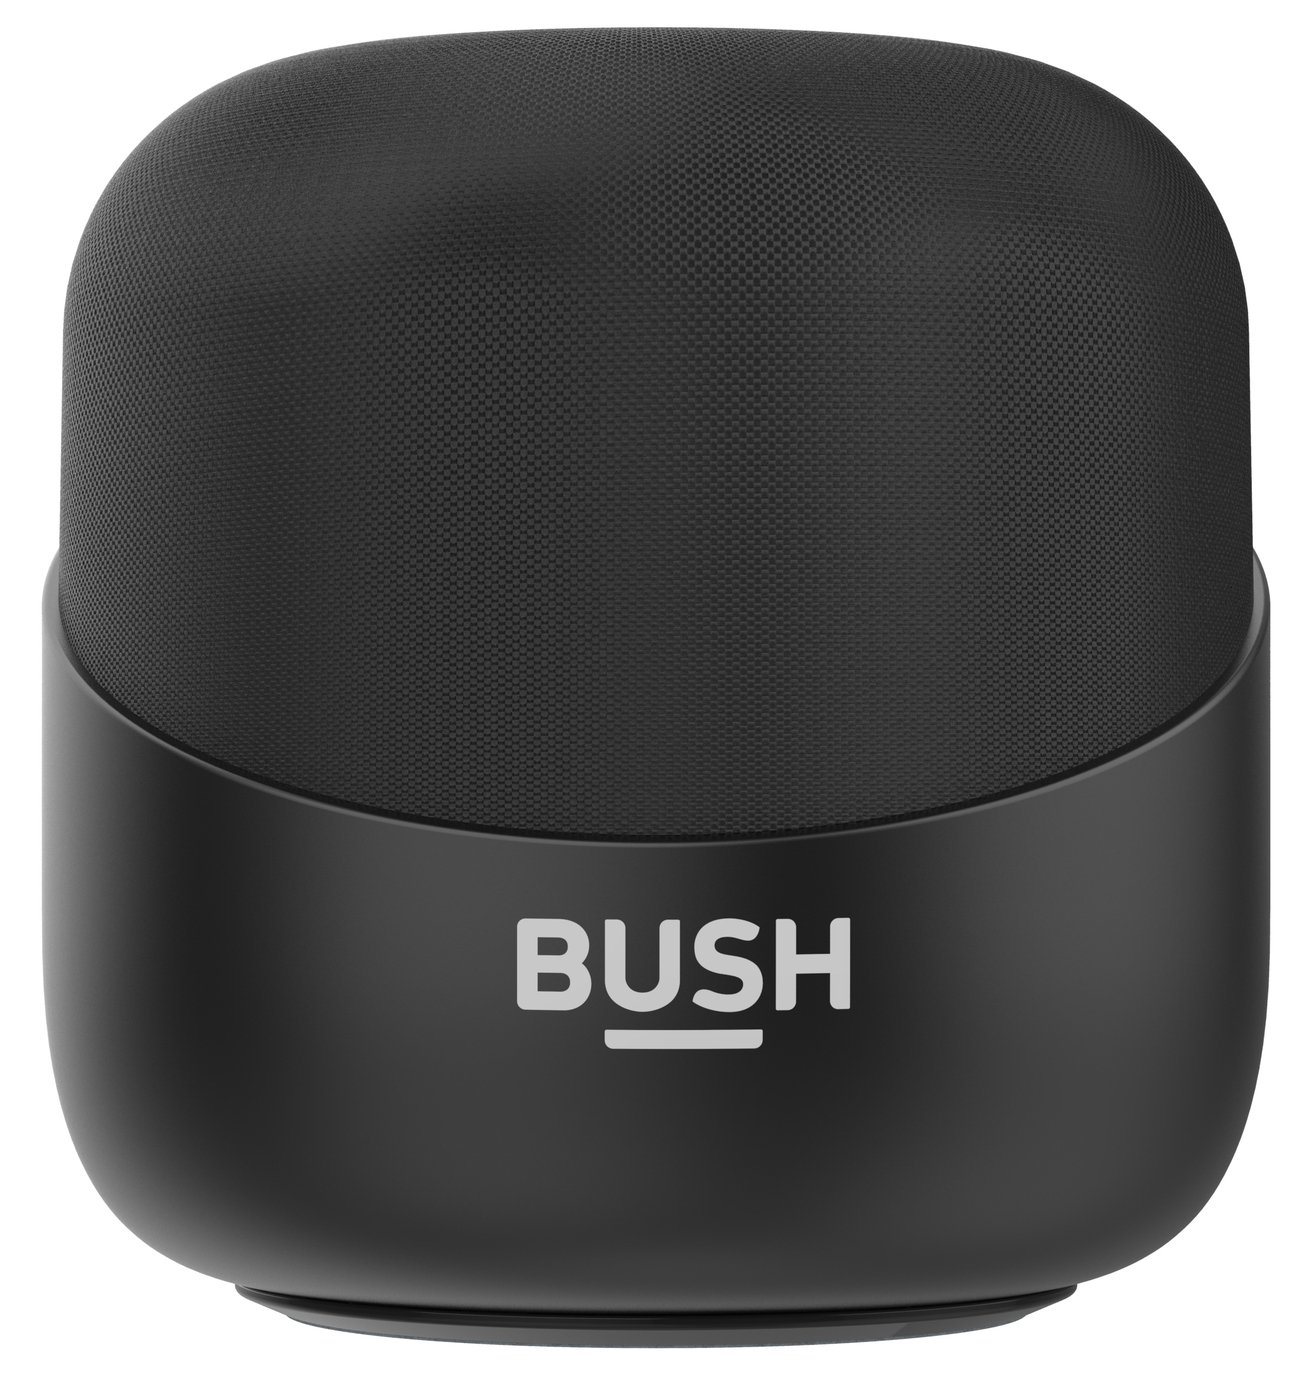 Bush Acorn Bluetooth Speaker Review